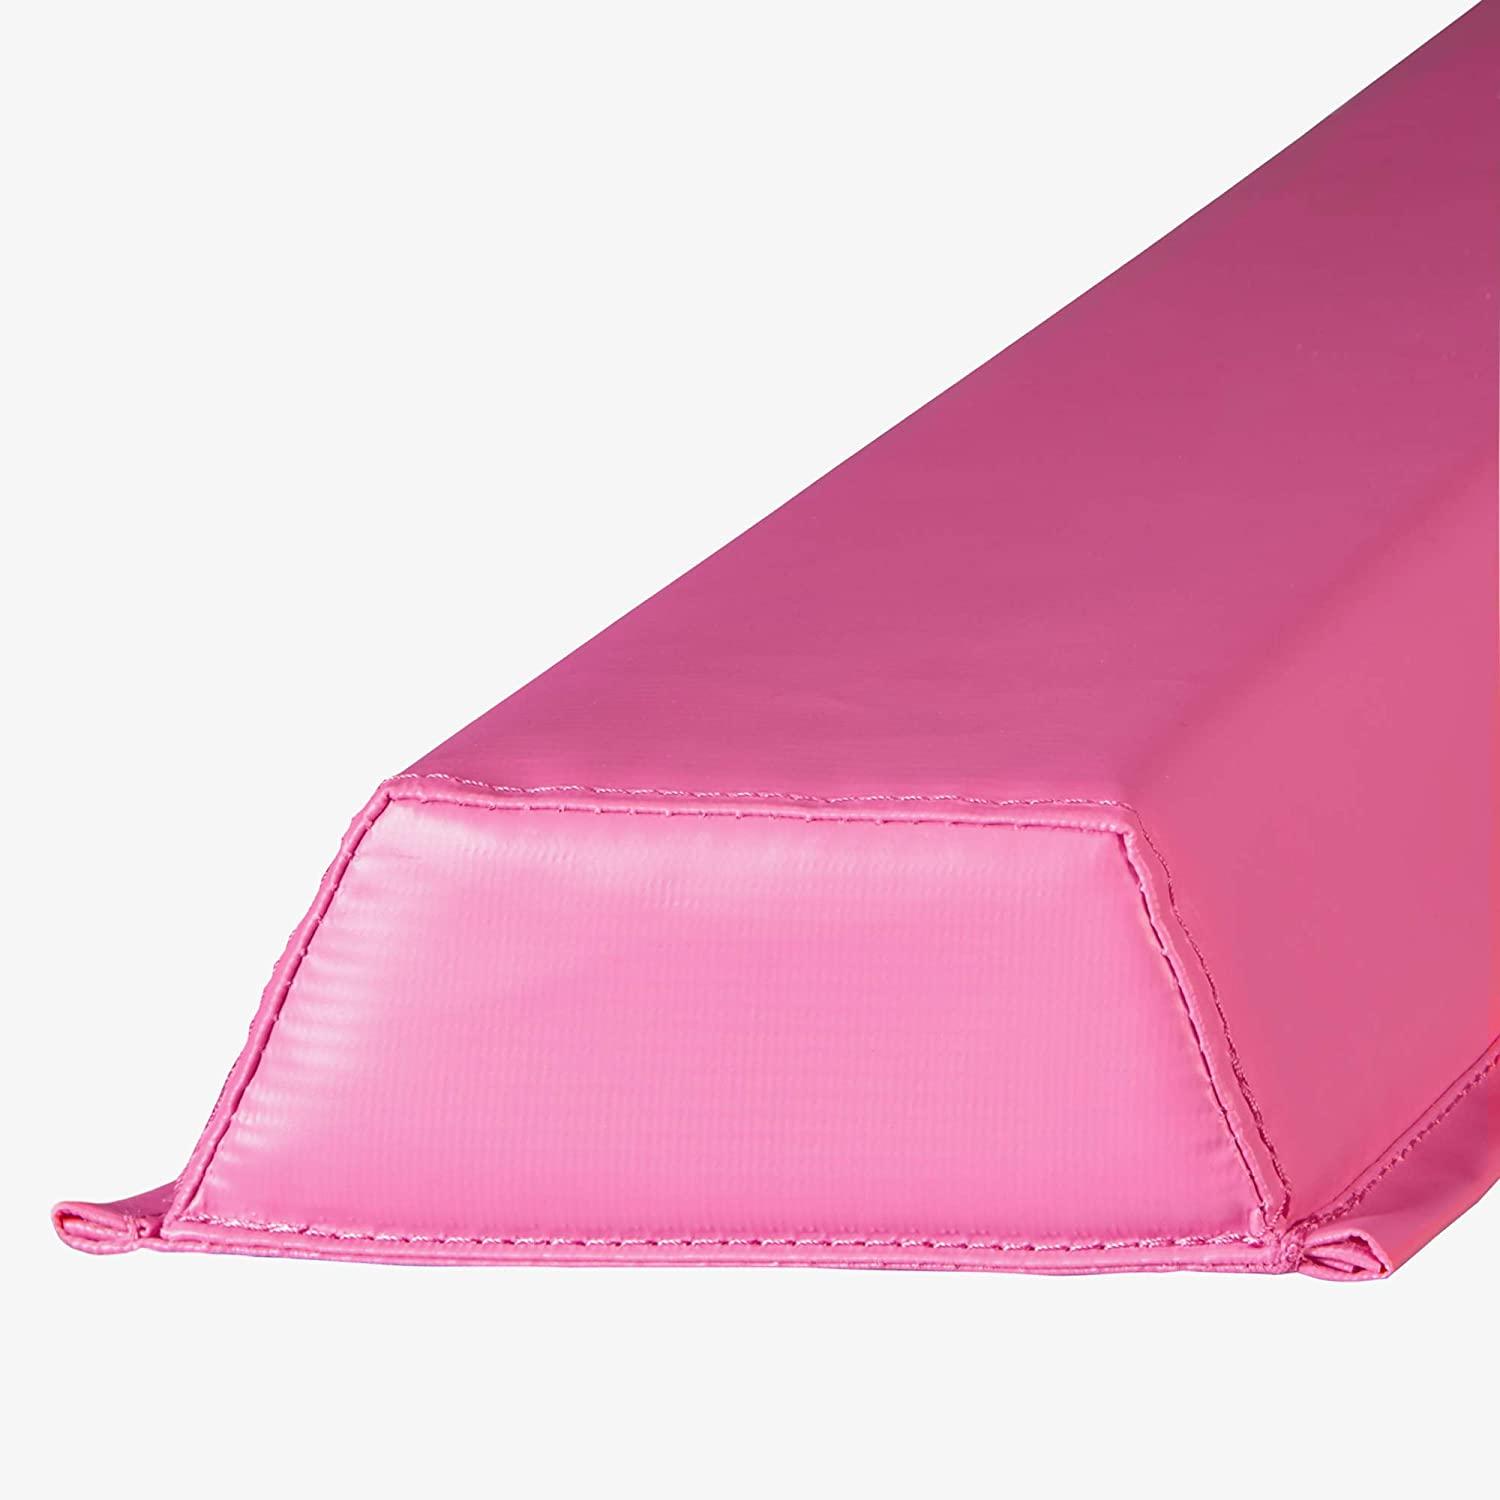 We Sell Mats 9' Folding Floor Balance Beam - Pink